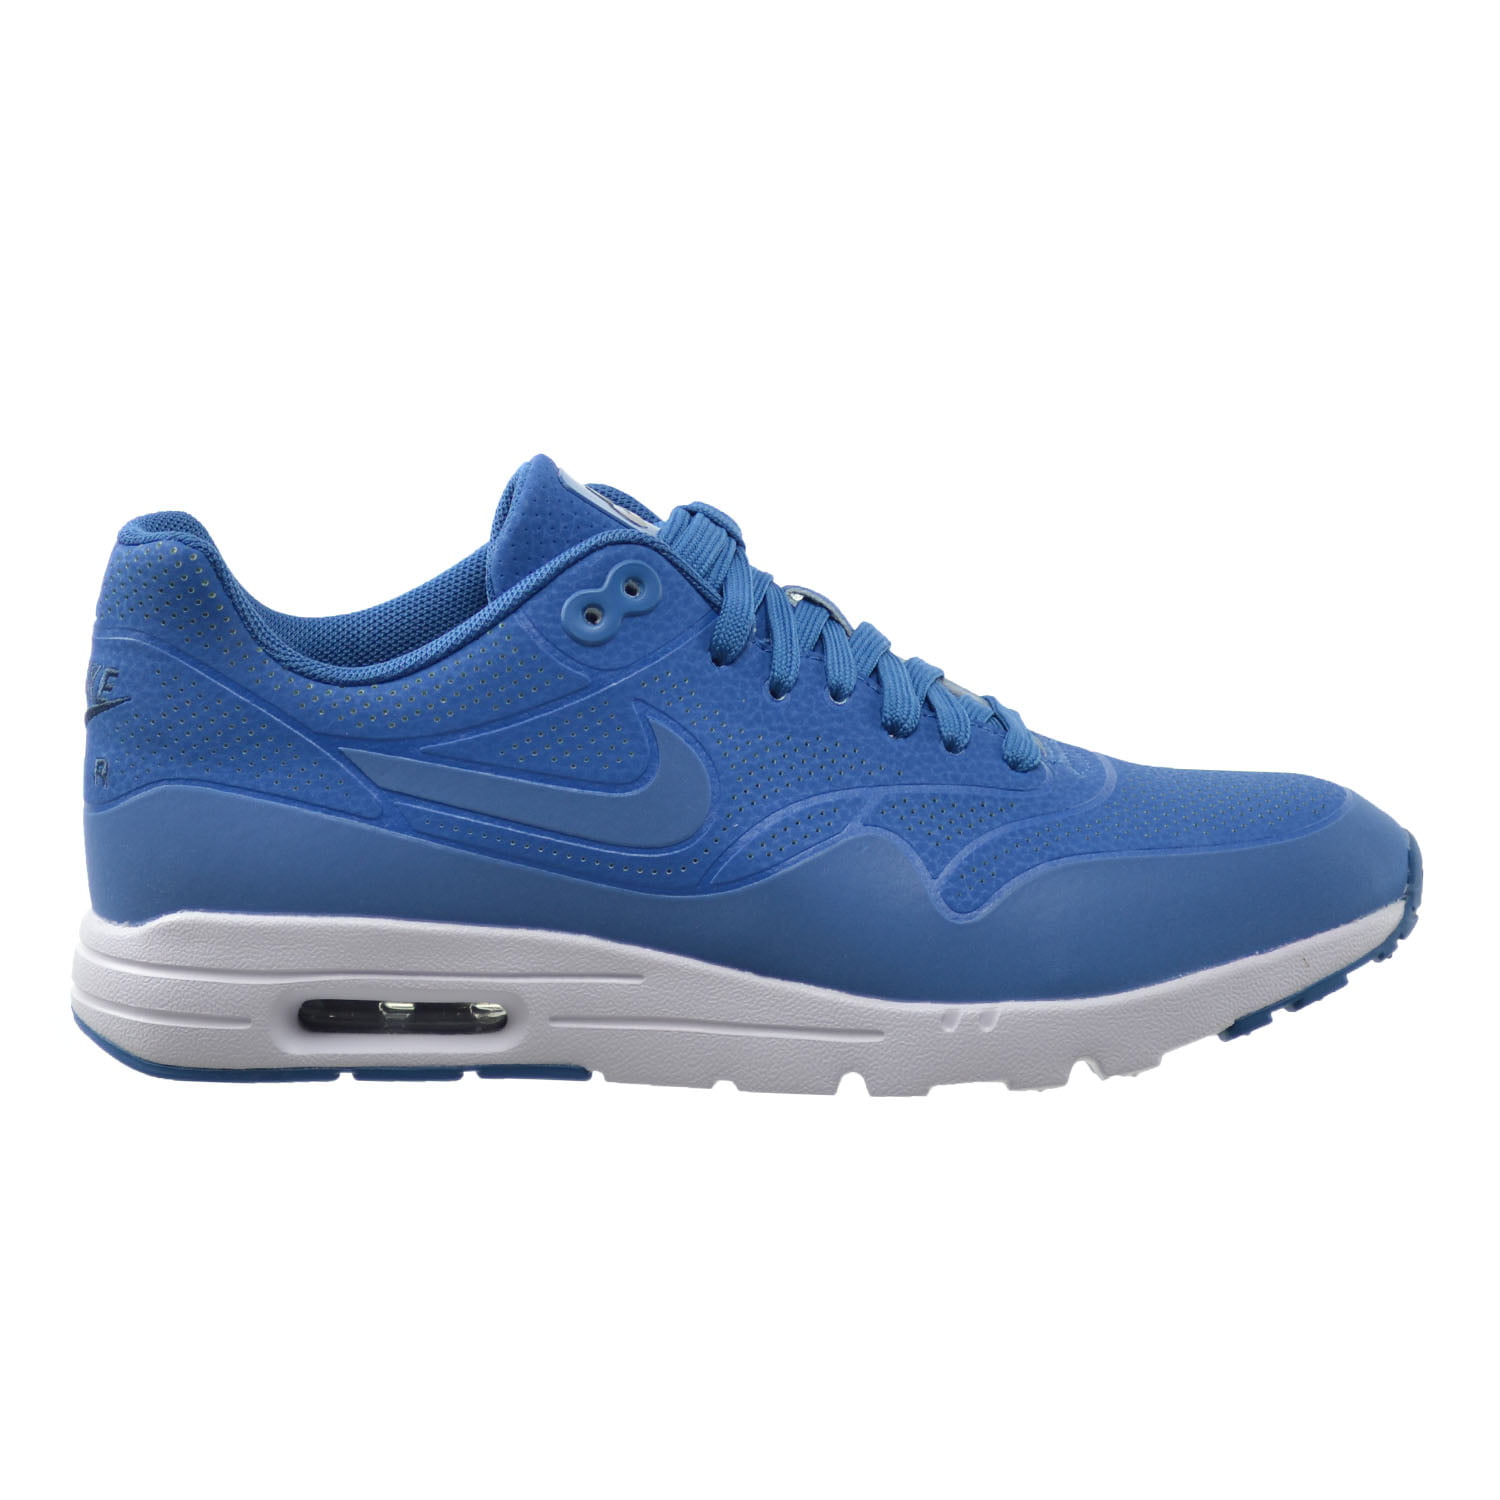 ego Arab register Nike Air Max 1 Ultra Moire Women's Running Shoes Brigade Blue/Pure Platinum  704995-402 - Walmart.com